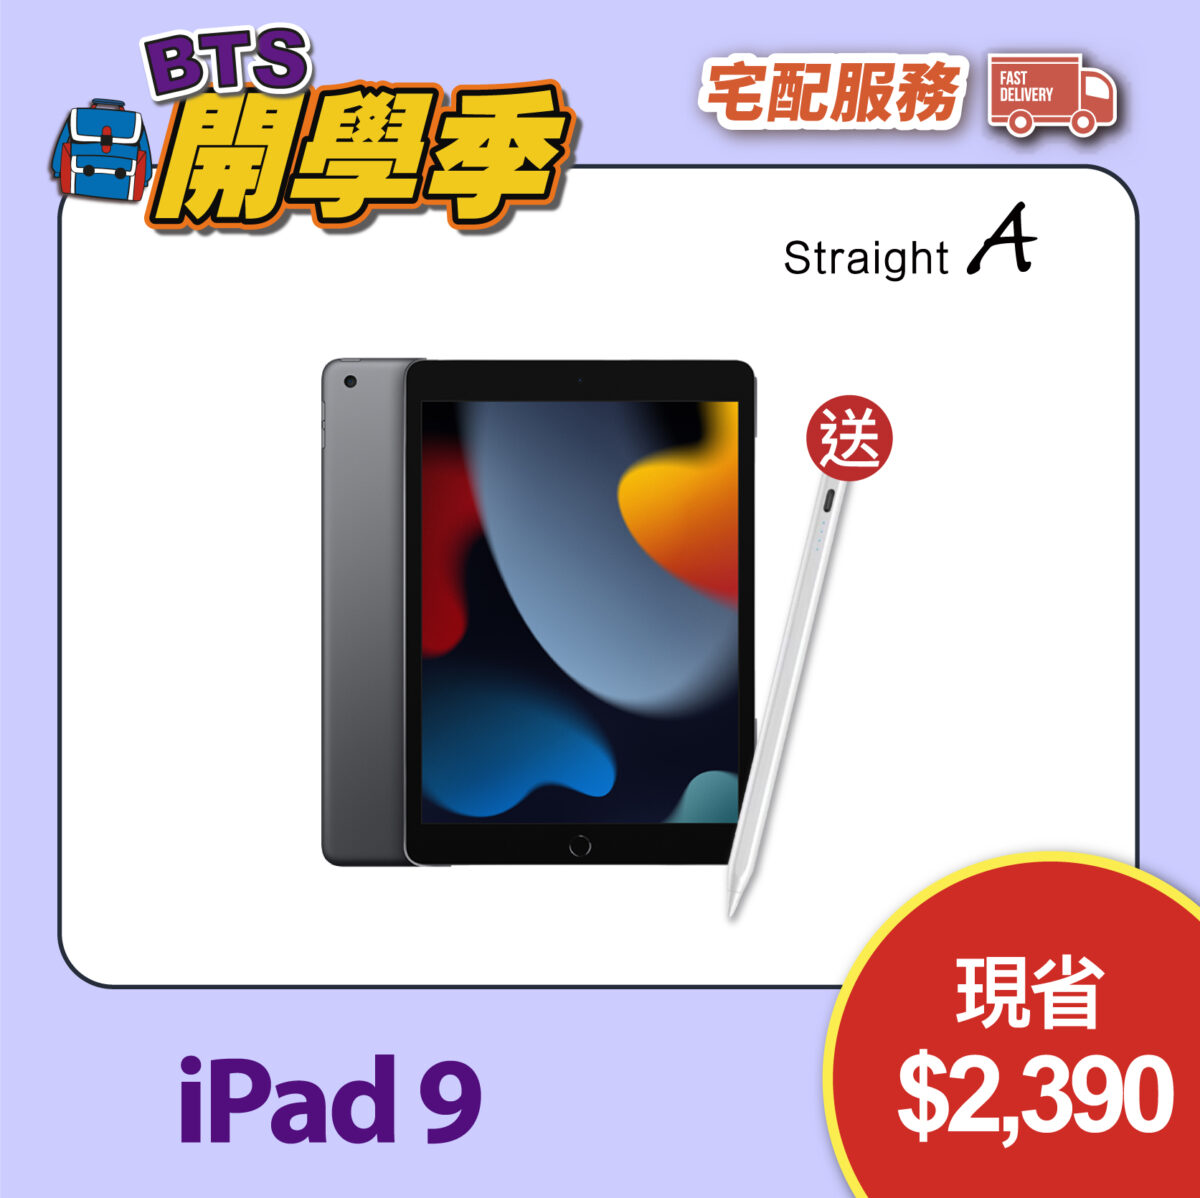 Mac iPad MacBook Air MacBook Pro iPad iPad mini iPad Air iPad Pro Straight A BTS 優惠